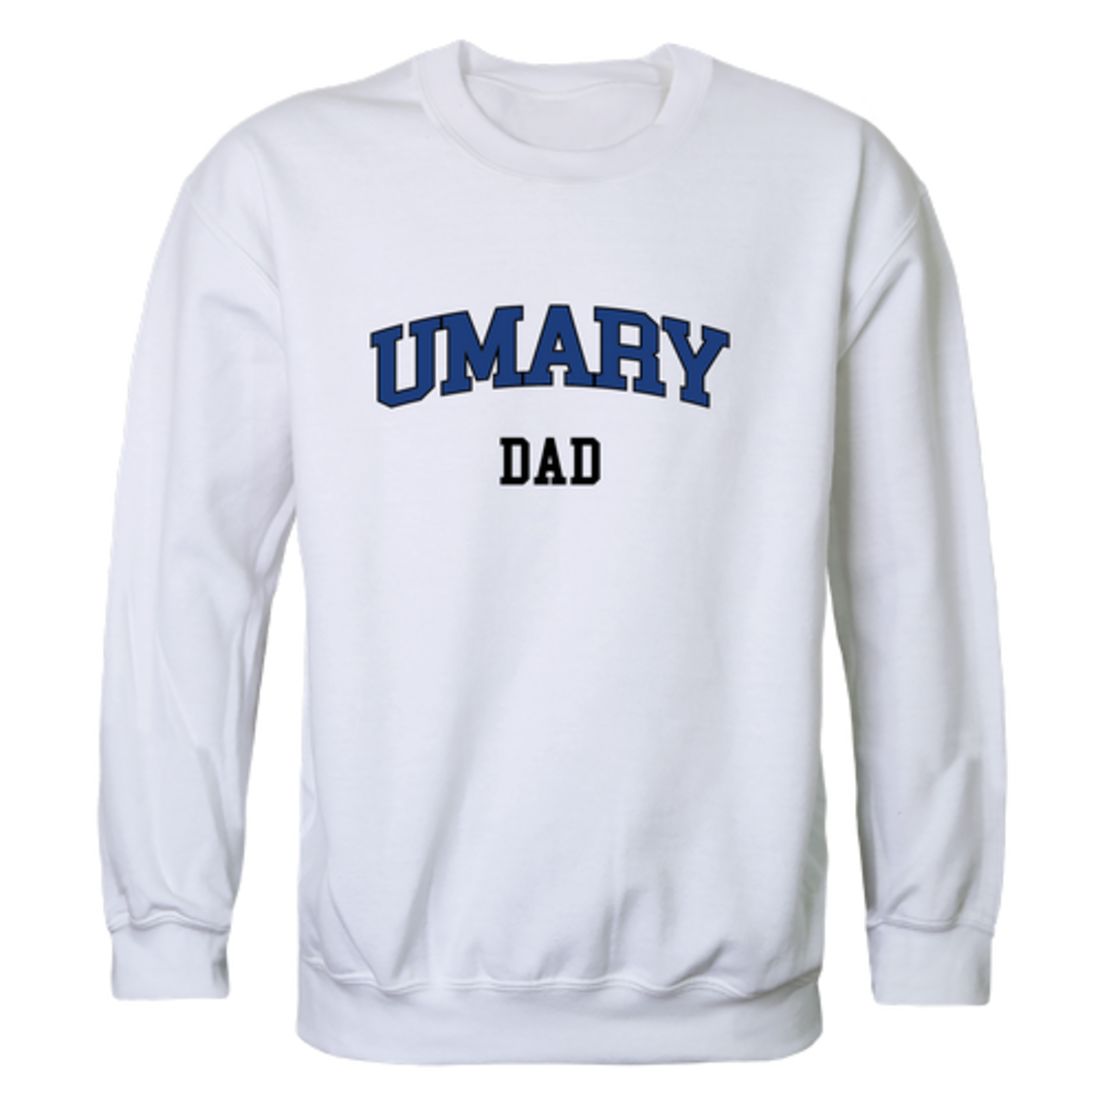 University of Mary Marauders Dad Fleece Crewneck Pullover Sweatshirt